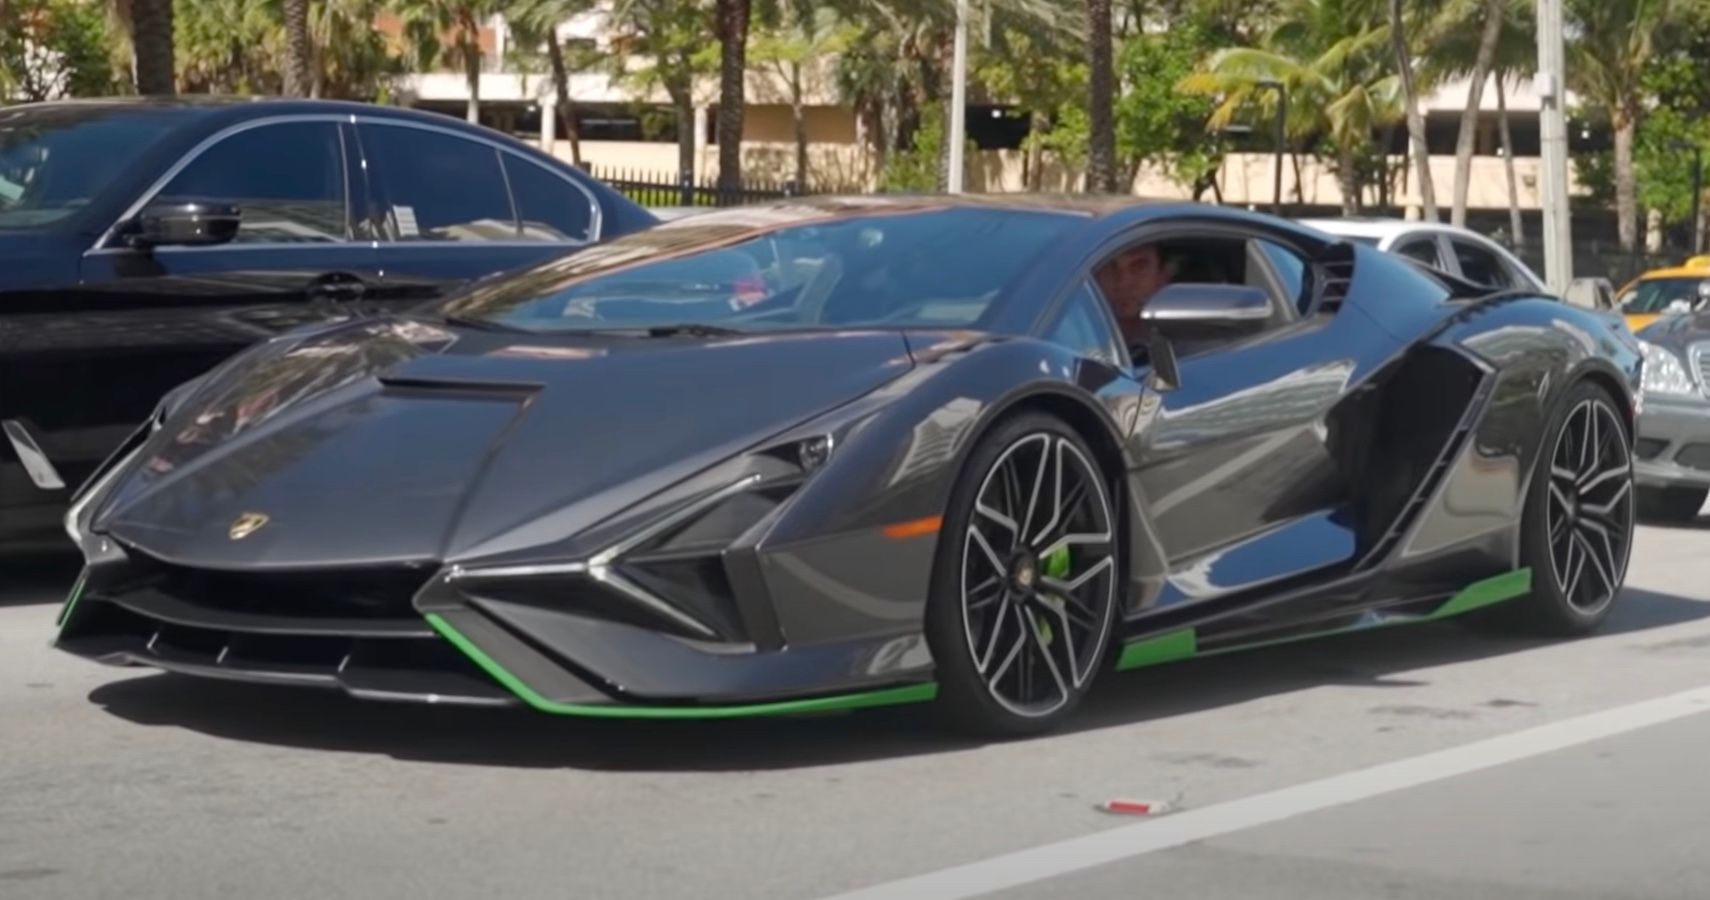 Lamborghini Sian Caught Revving Its Glorious V12 In Rare Sighting On Miami's Streets